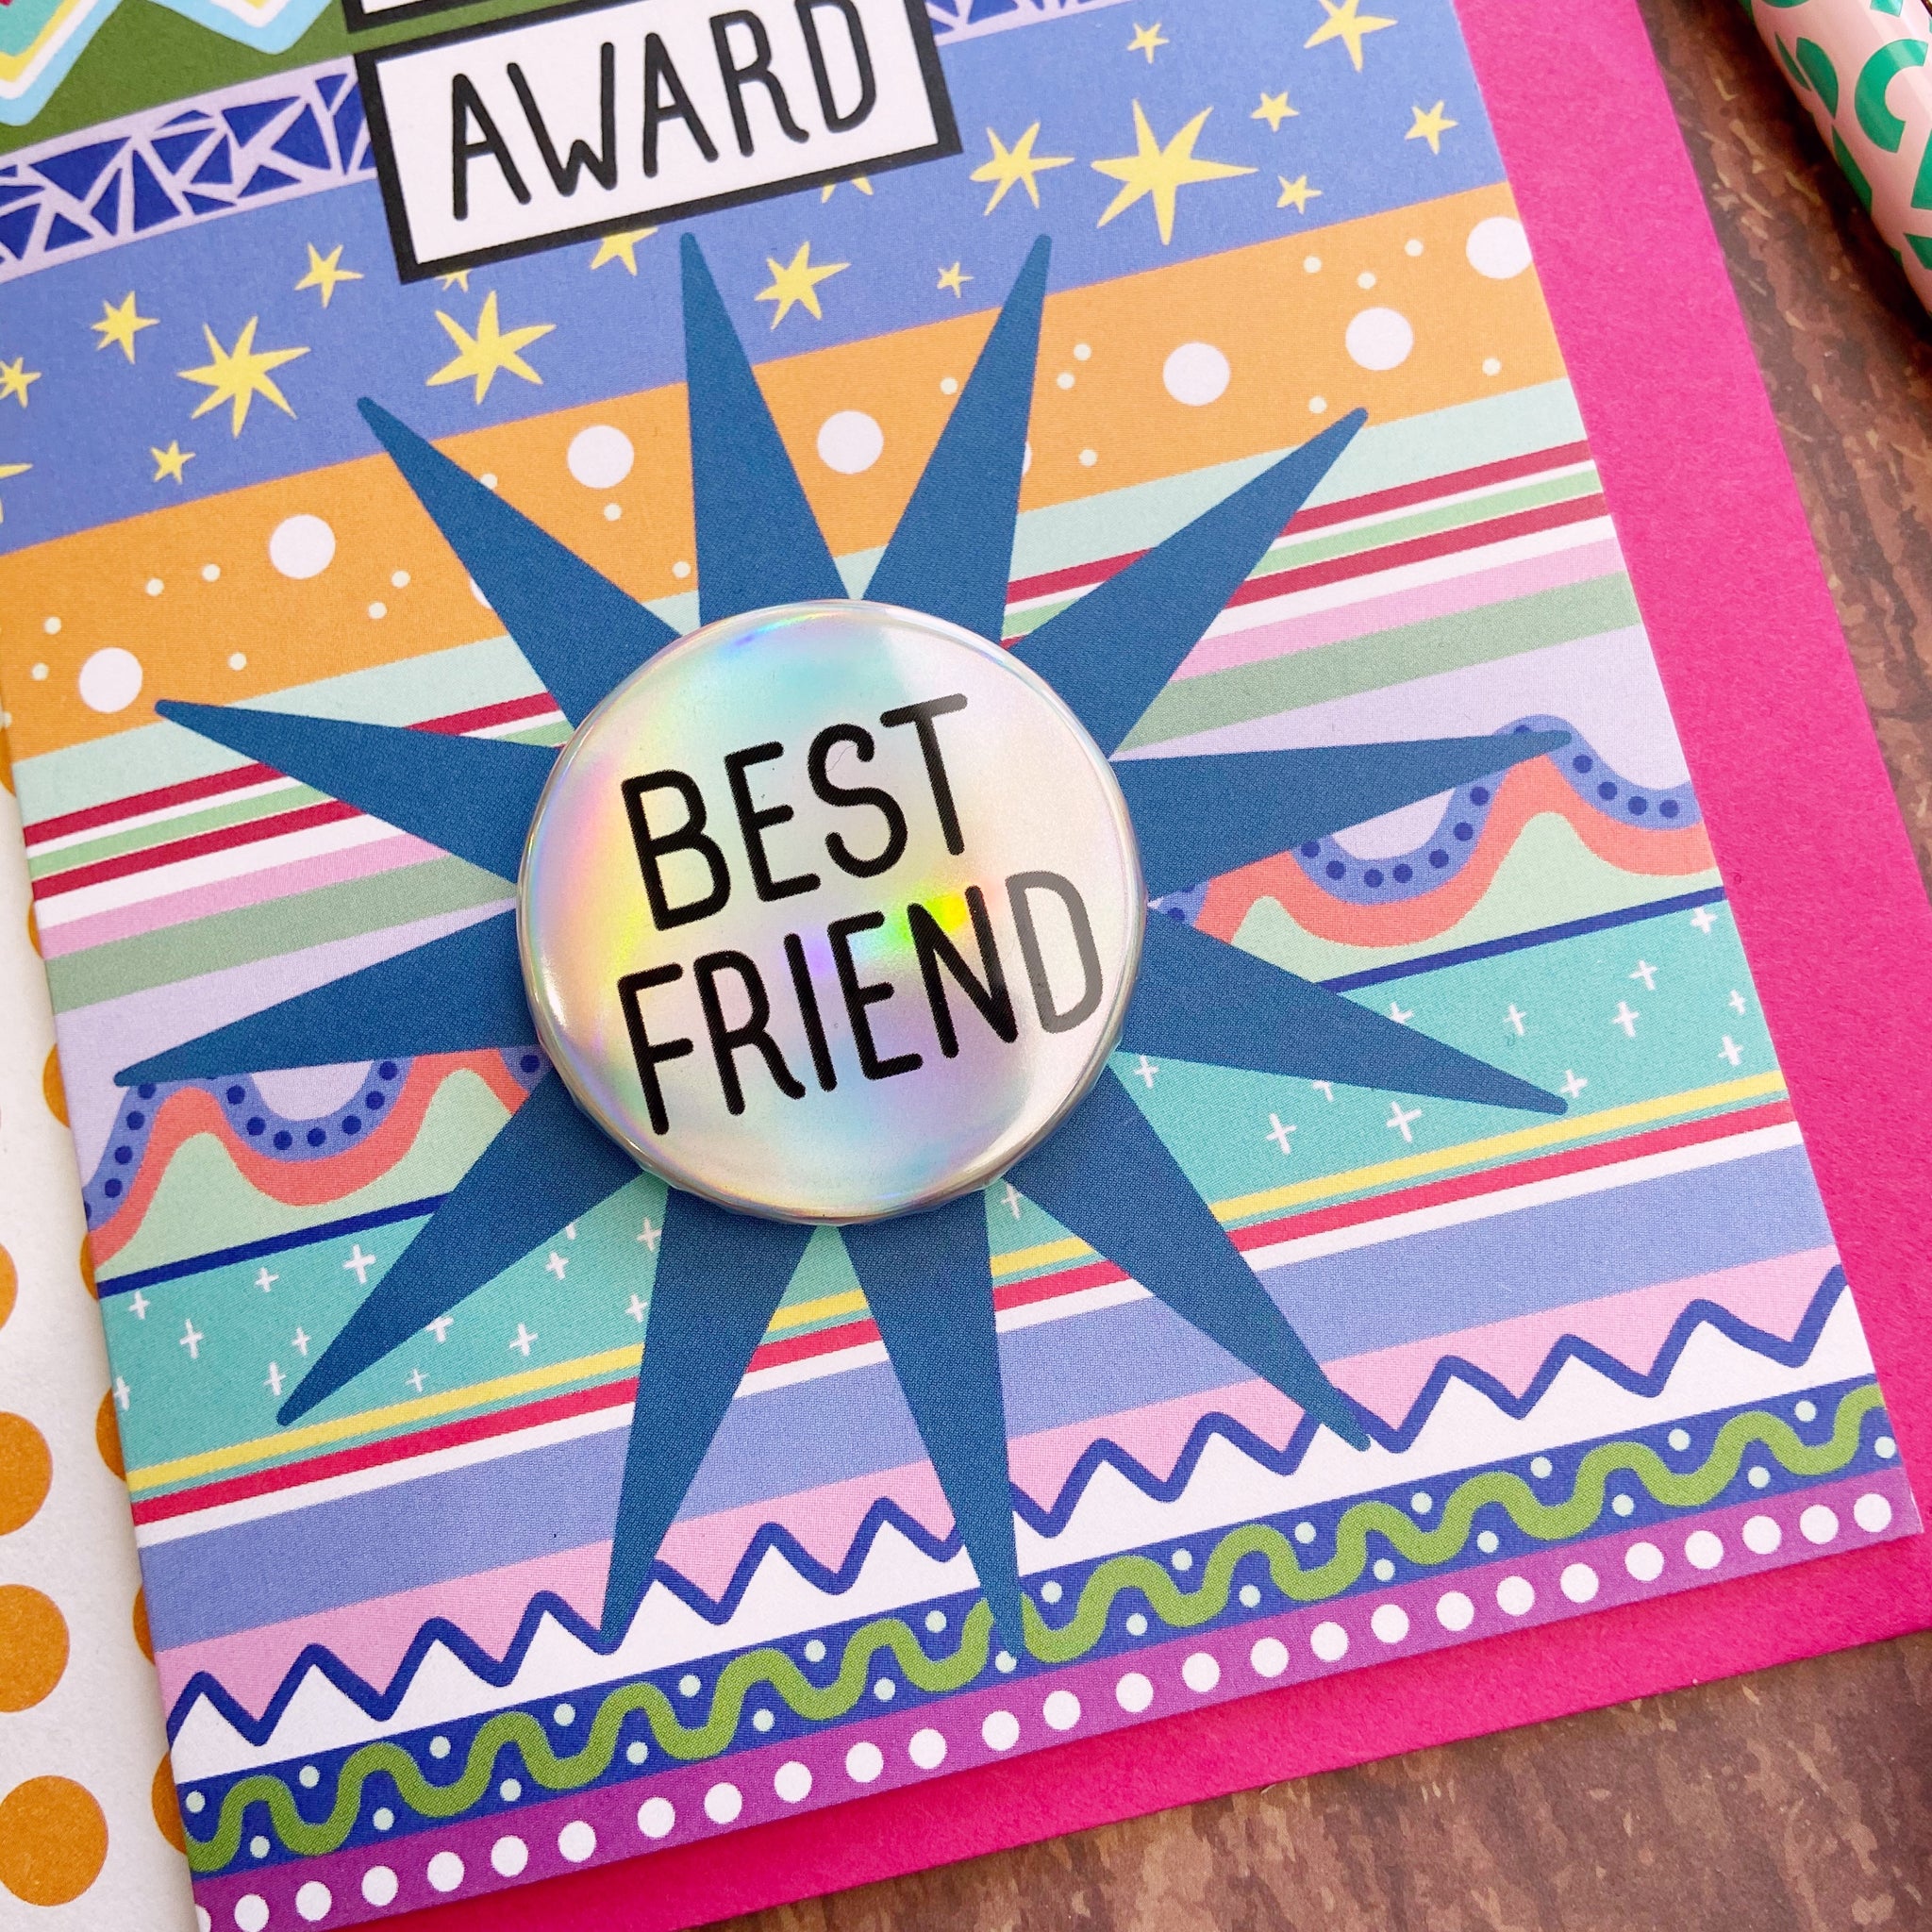 Best Friend - Friend Award Card